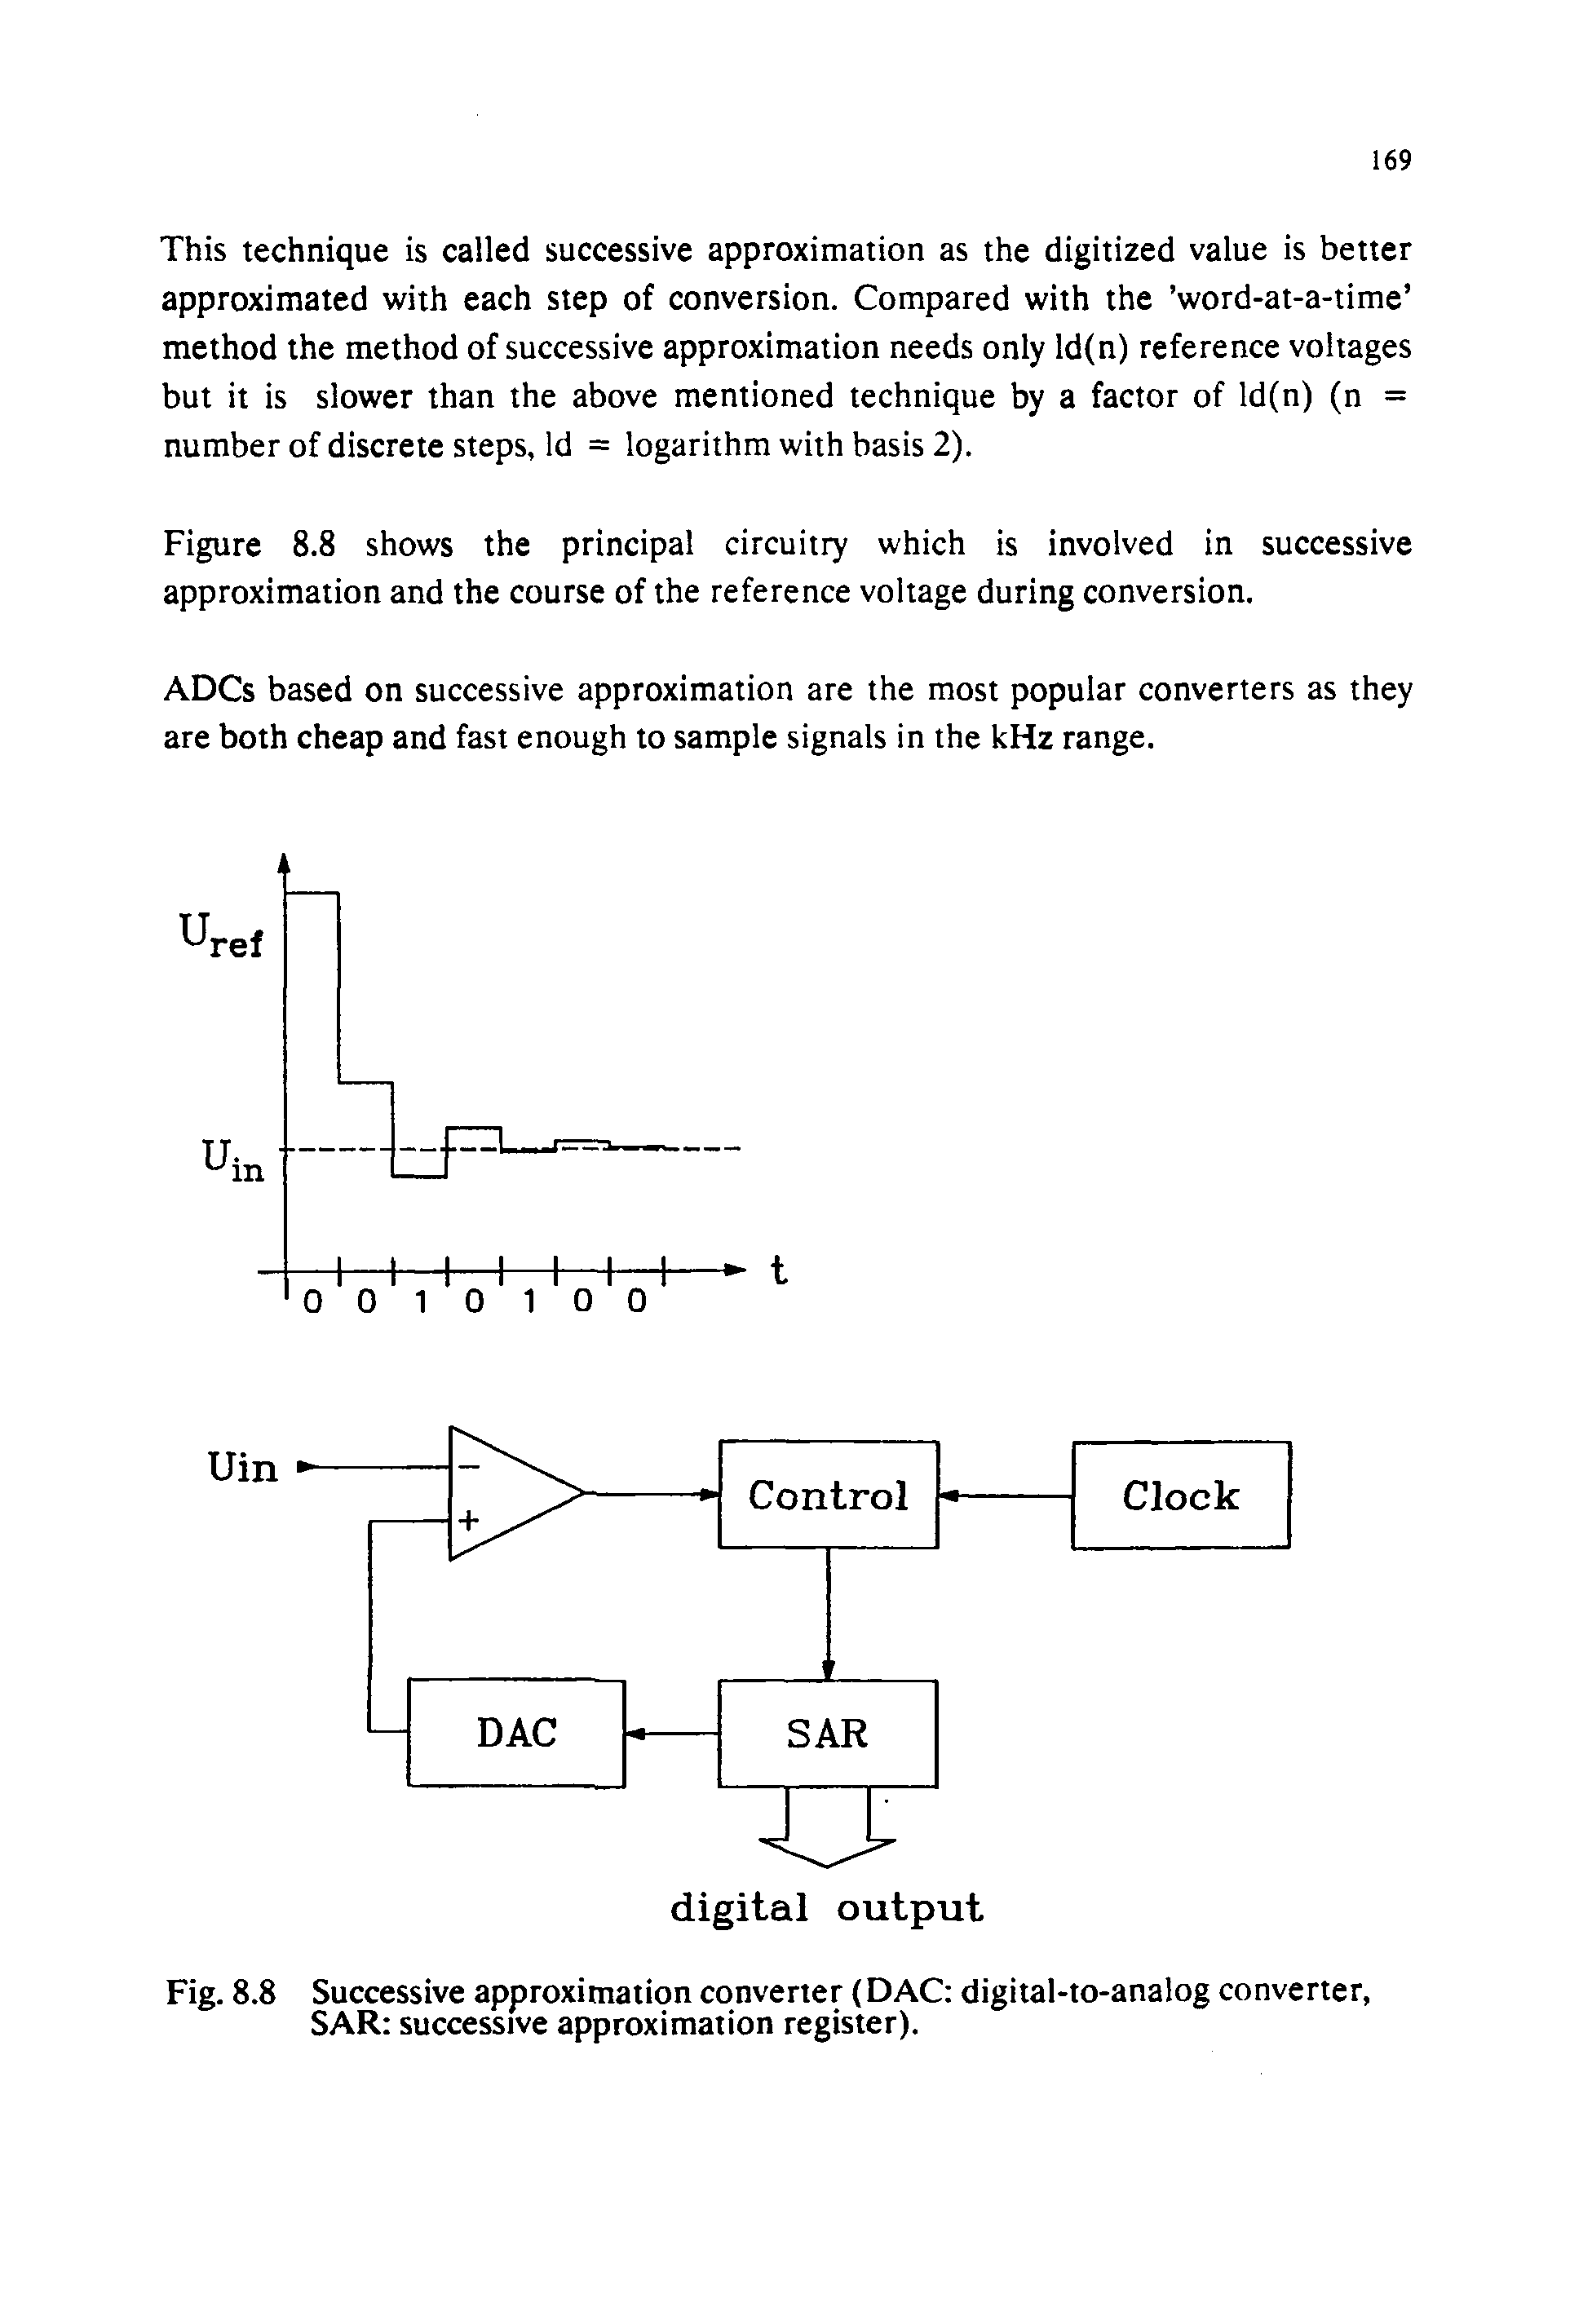 Fig. 8.8 Successive approximation converter (DAC digital-to-analog converter, SAR successive approximation register).